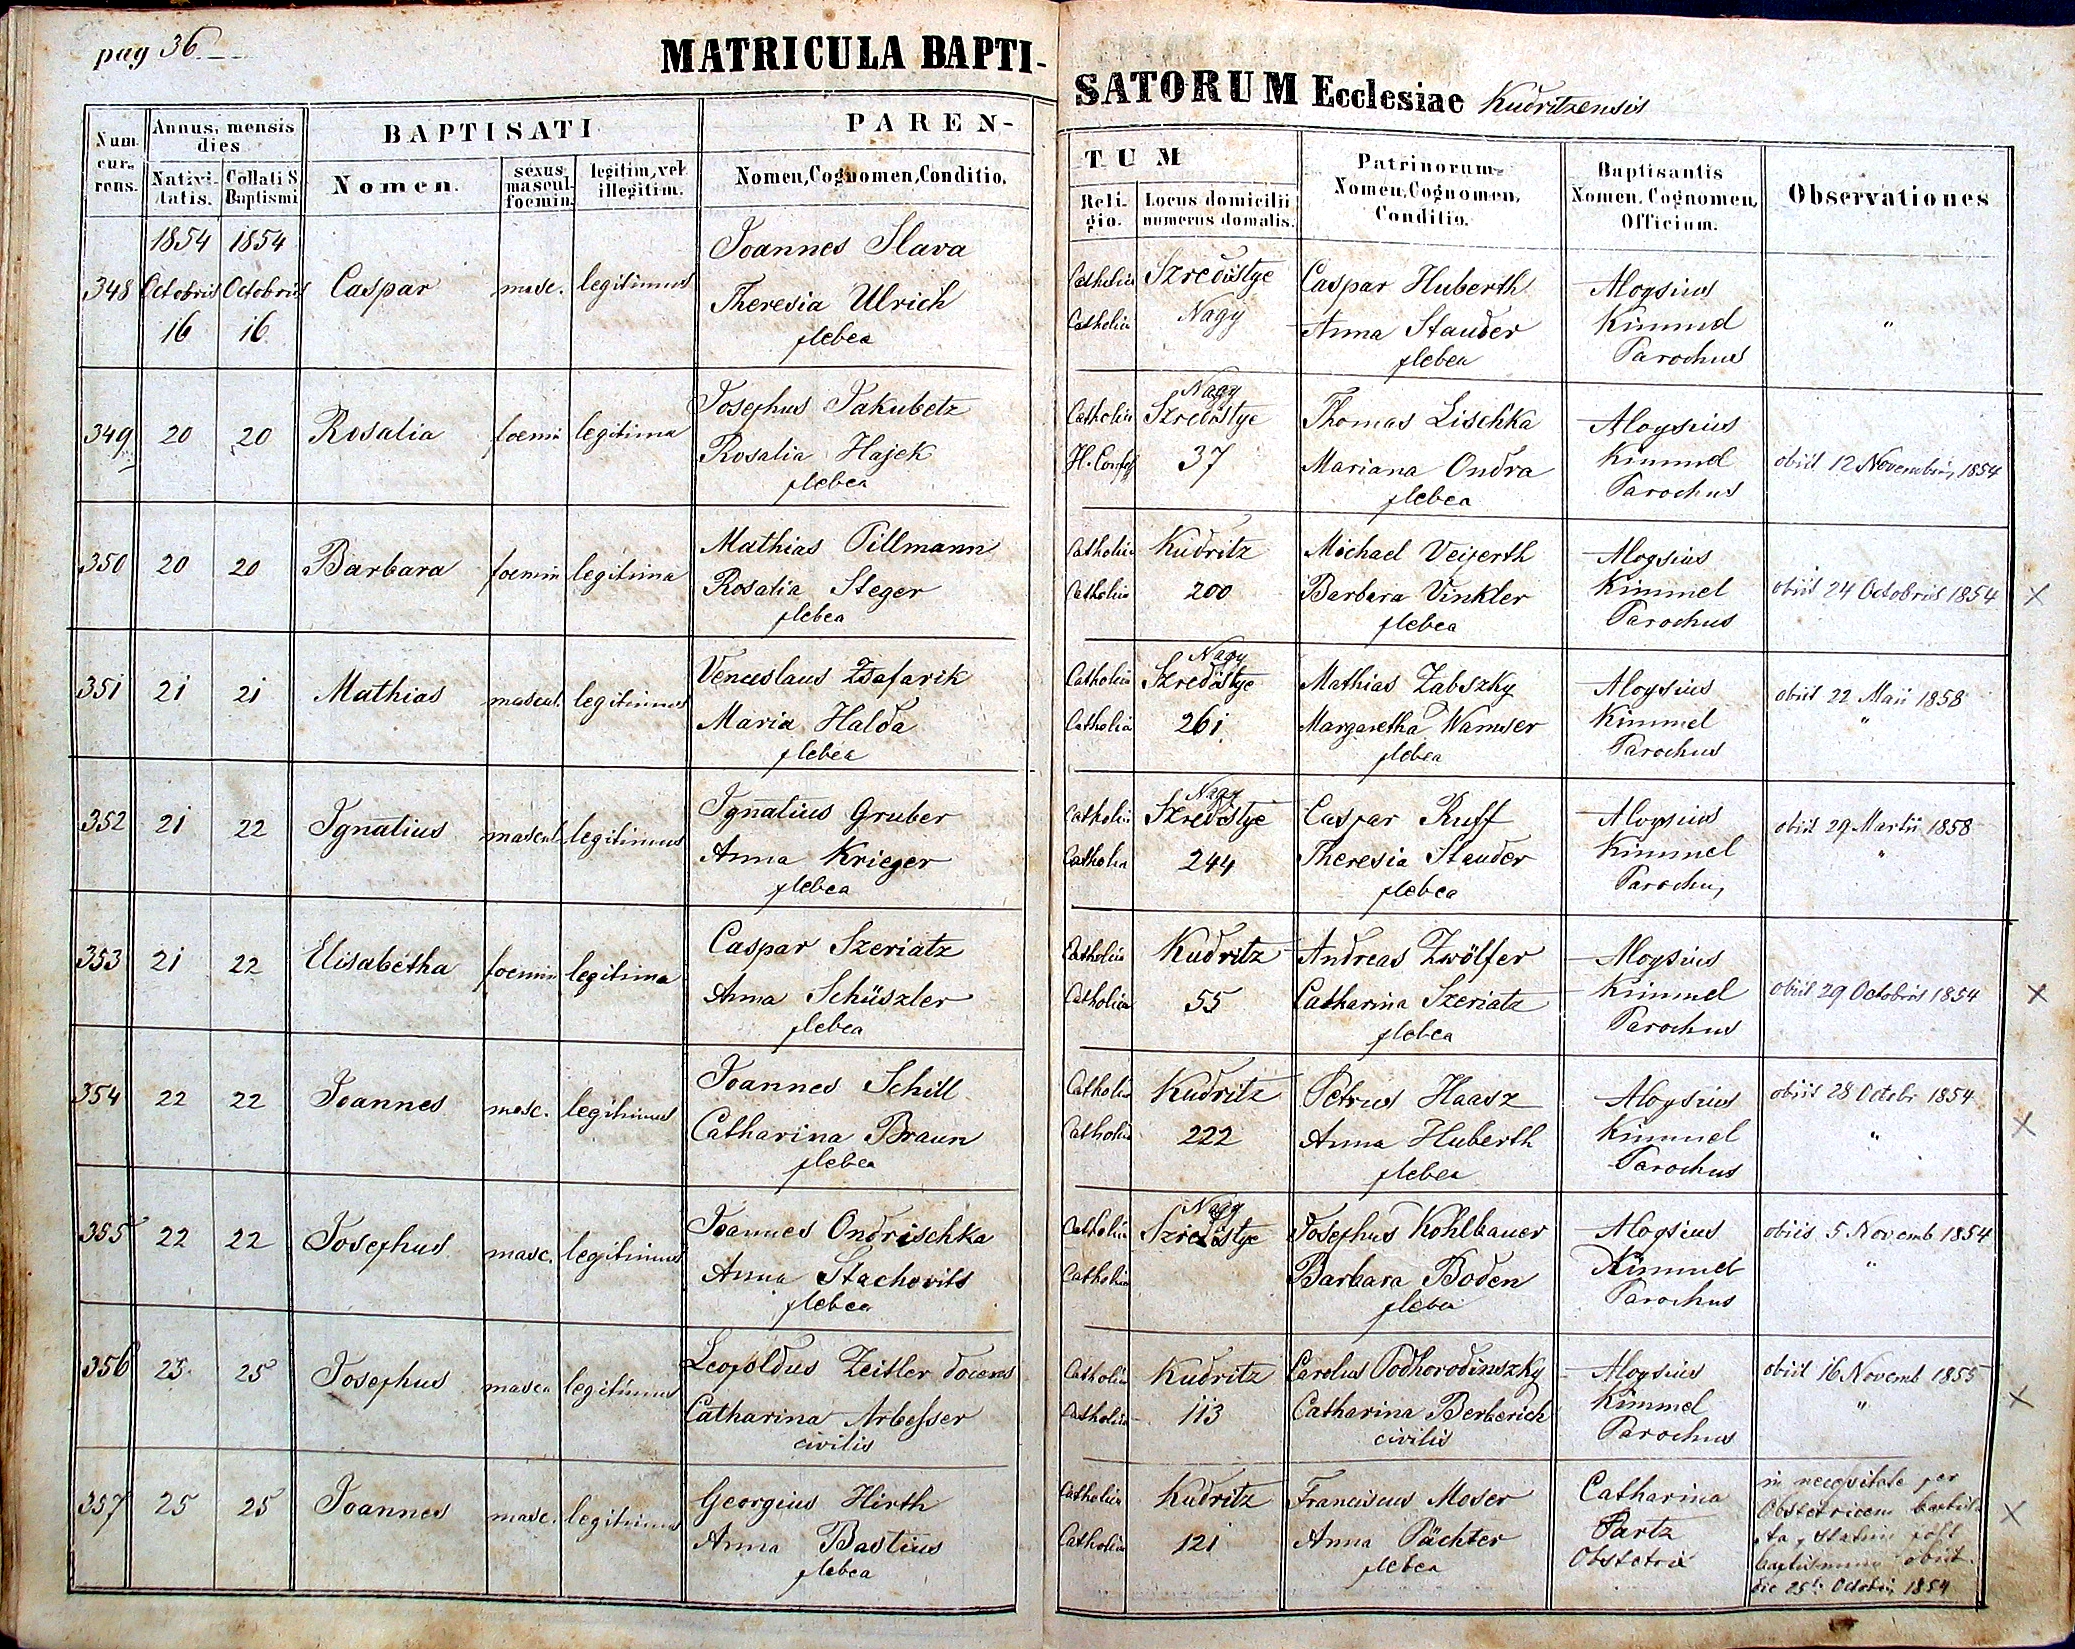 images/church_records/BIRTHS/1852-1870B/036